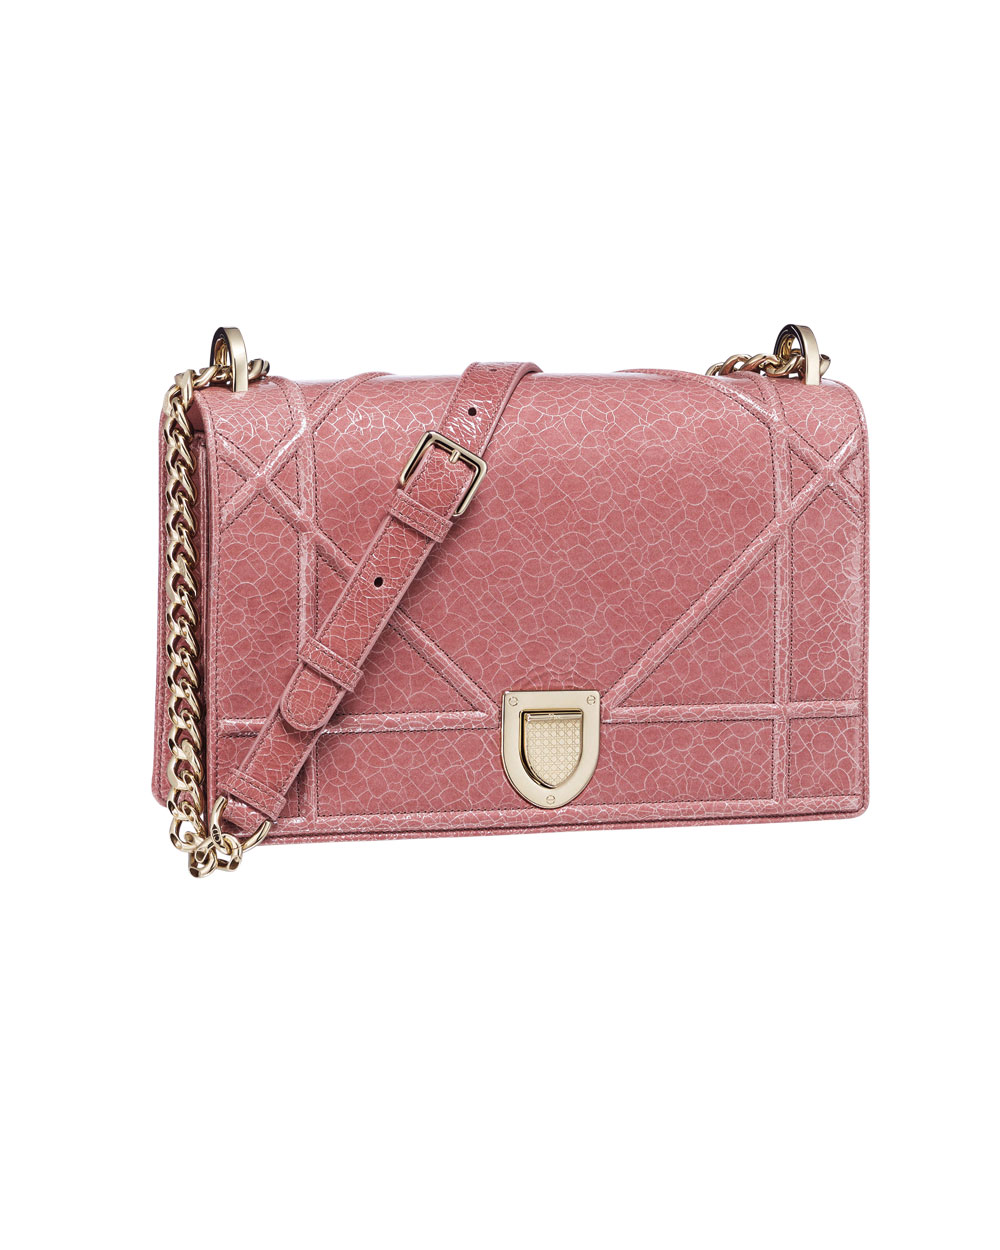 Christian Dior bag, $5500